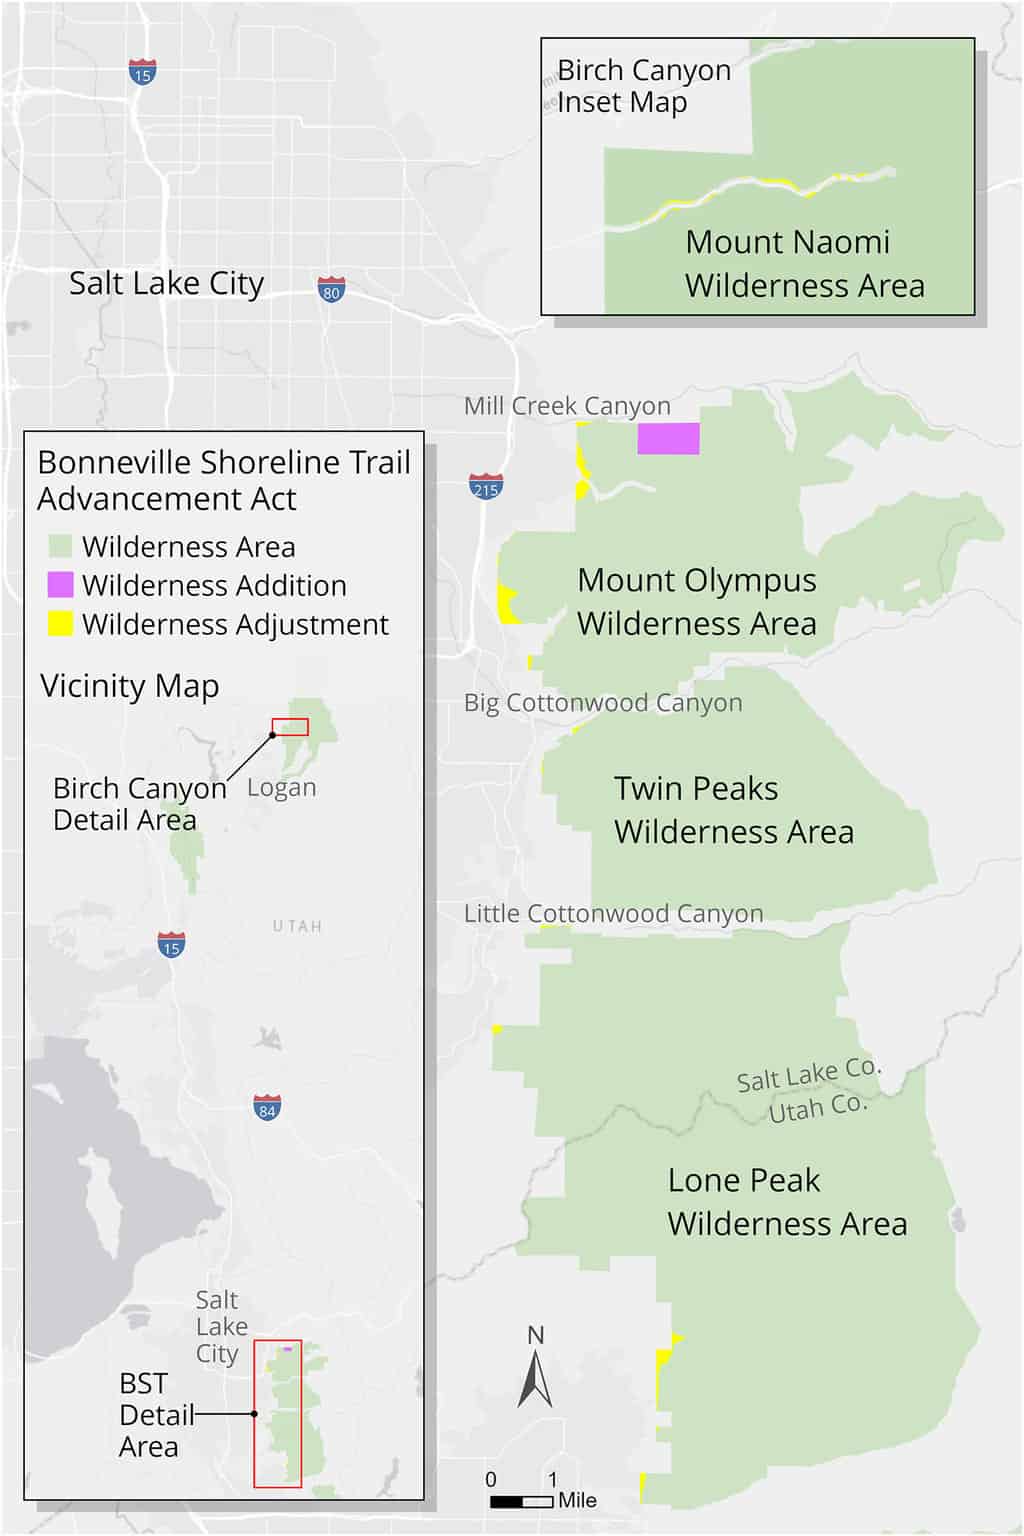 Binneville Shoreline Advancement Act map